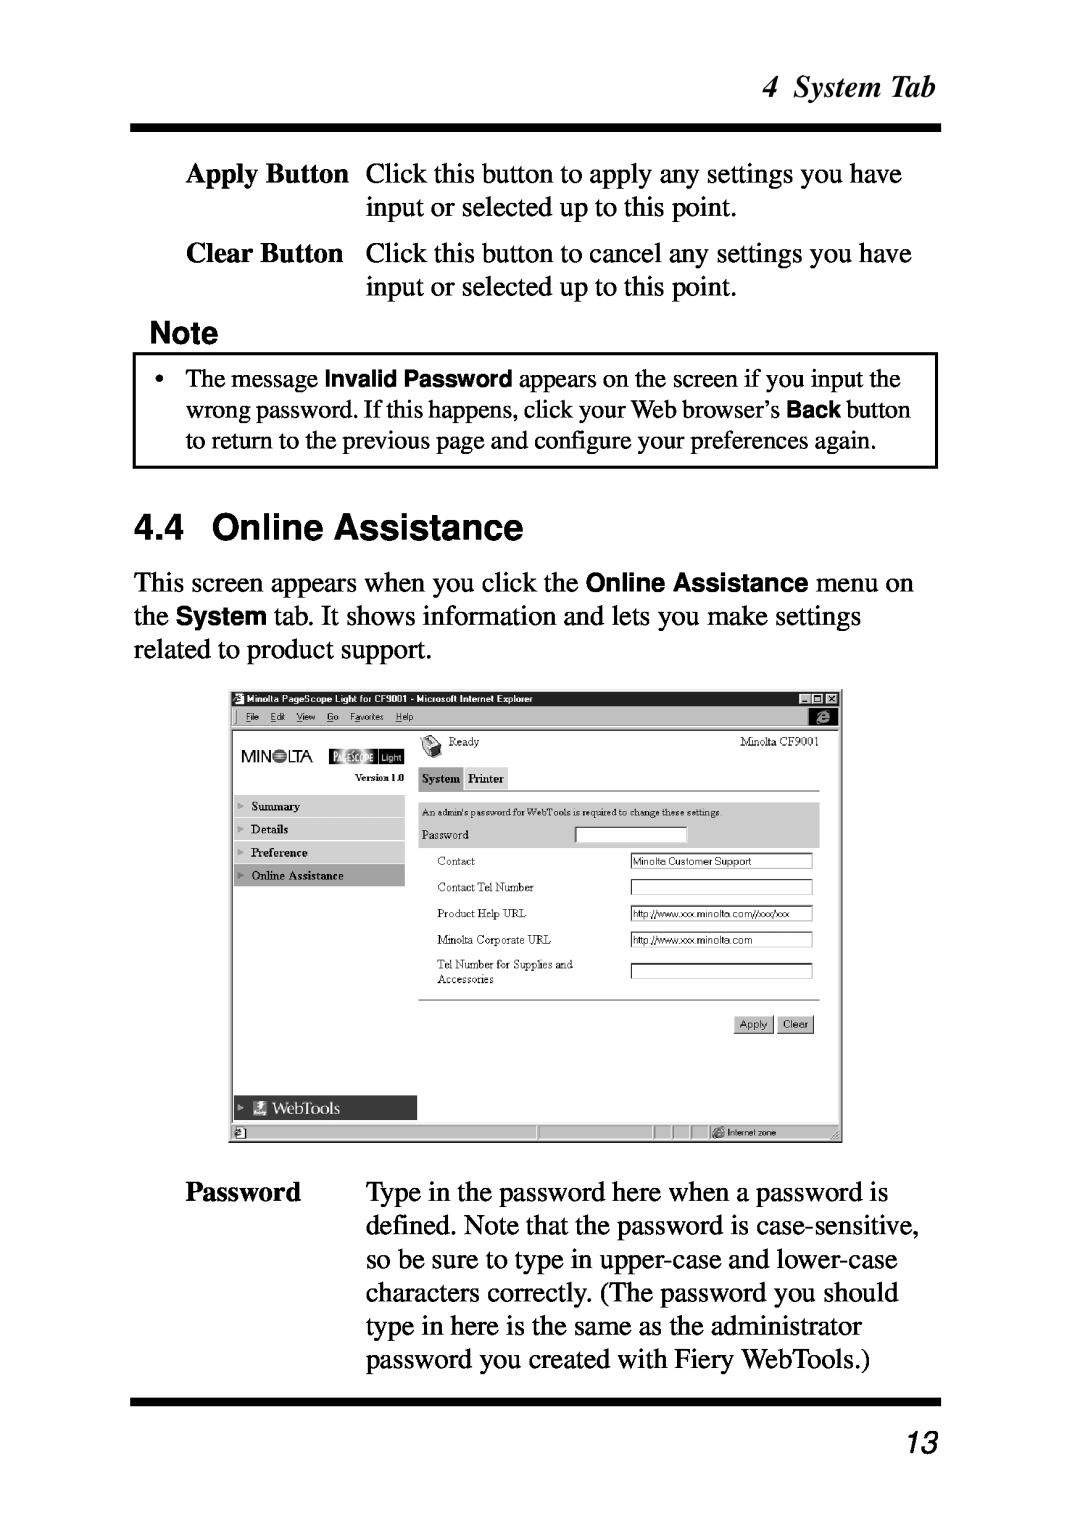 Minolta X3e, Z4 manual Online Assistance, System Tab 